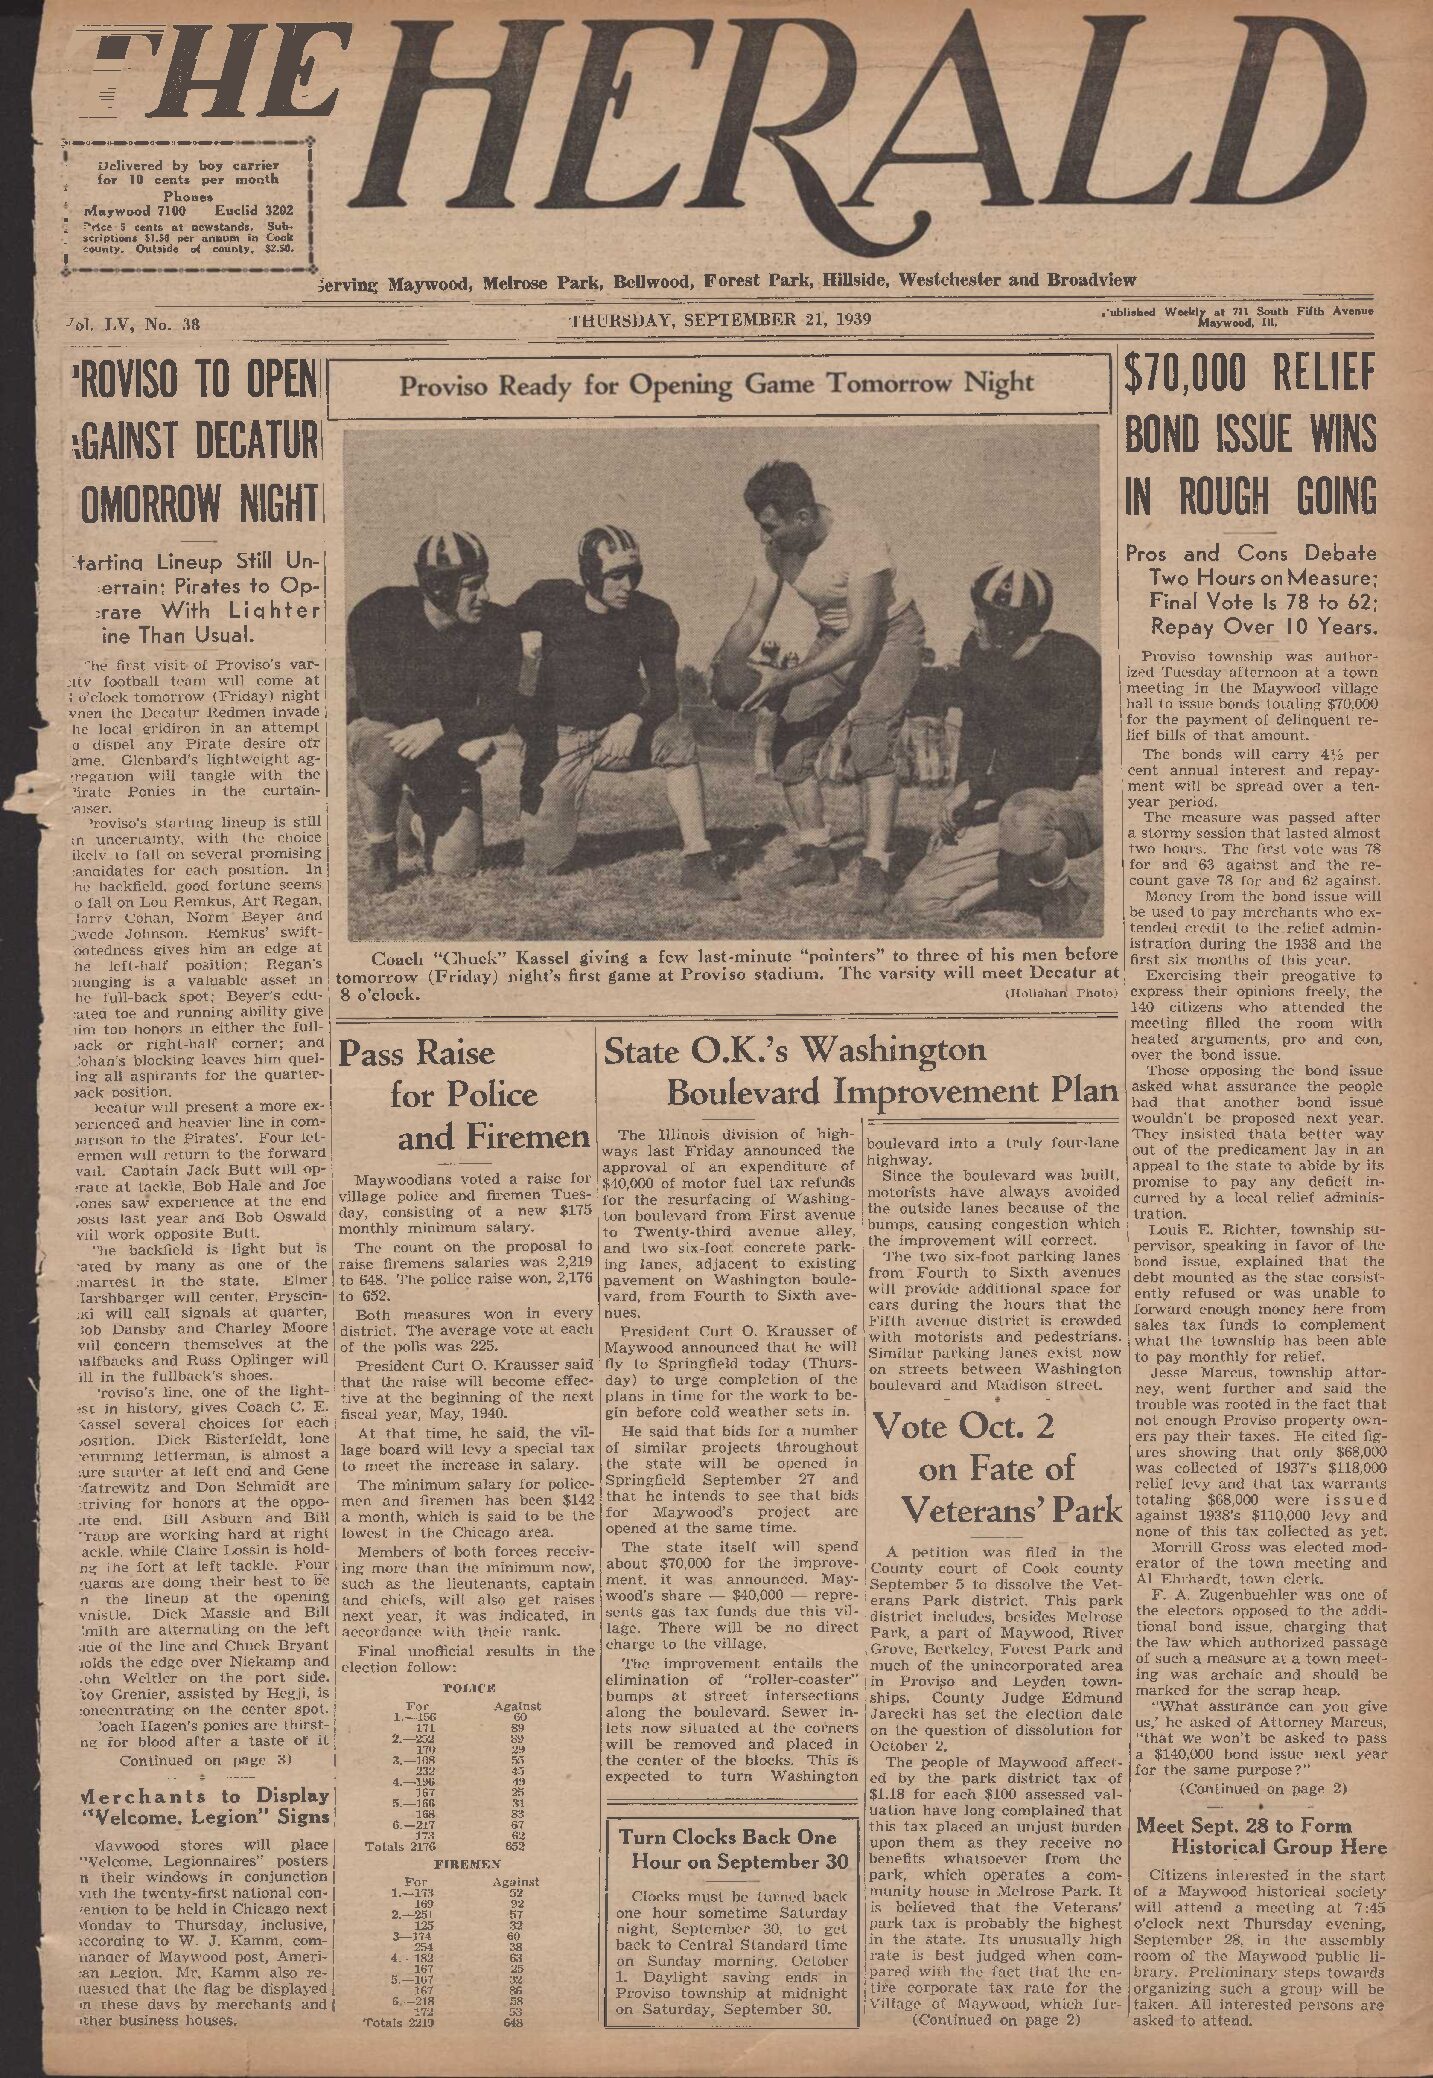 The Herald – 19390921